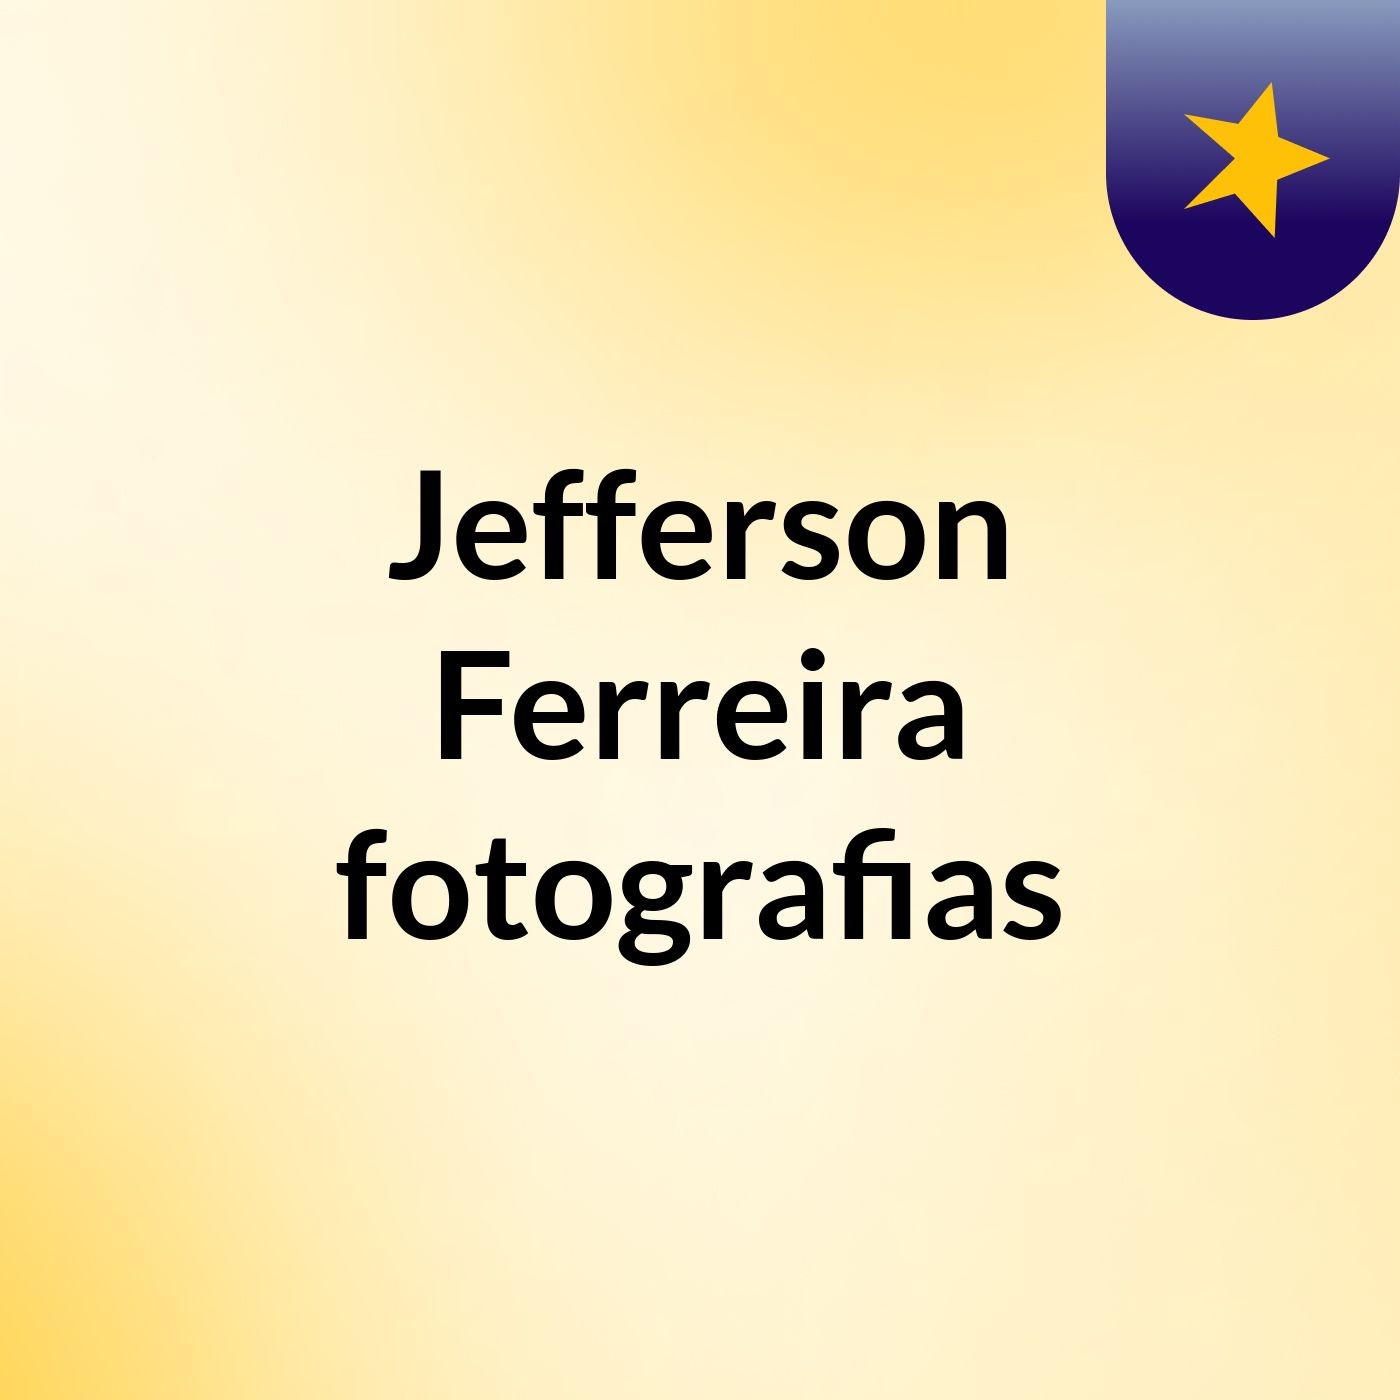 Jefferson Ferreira fotografias